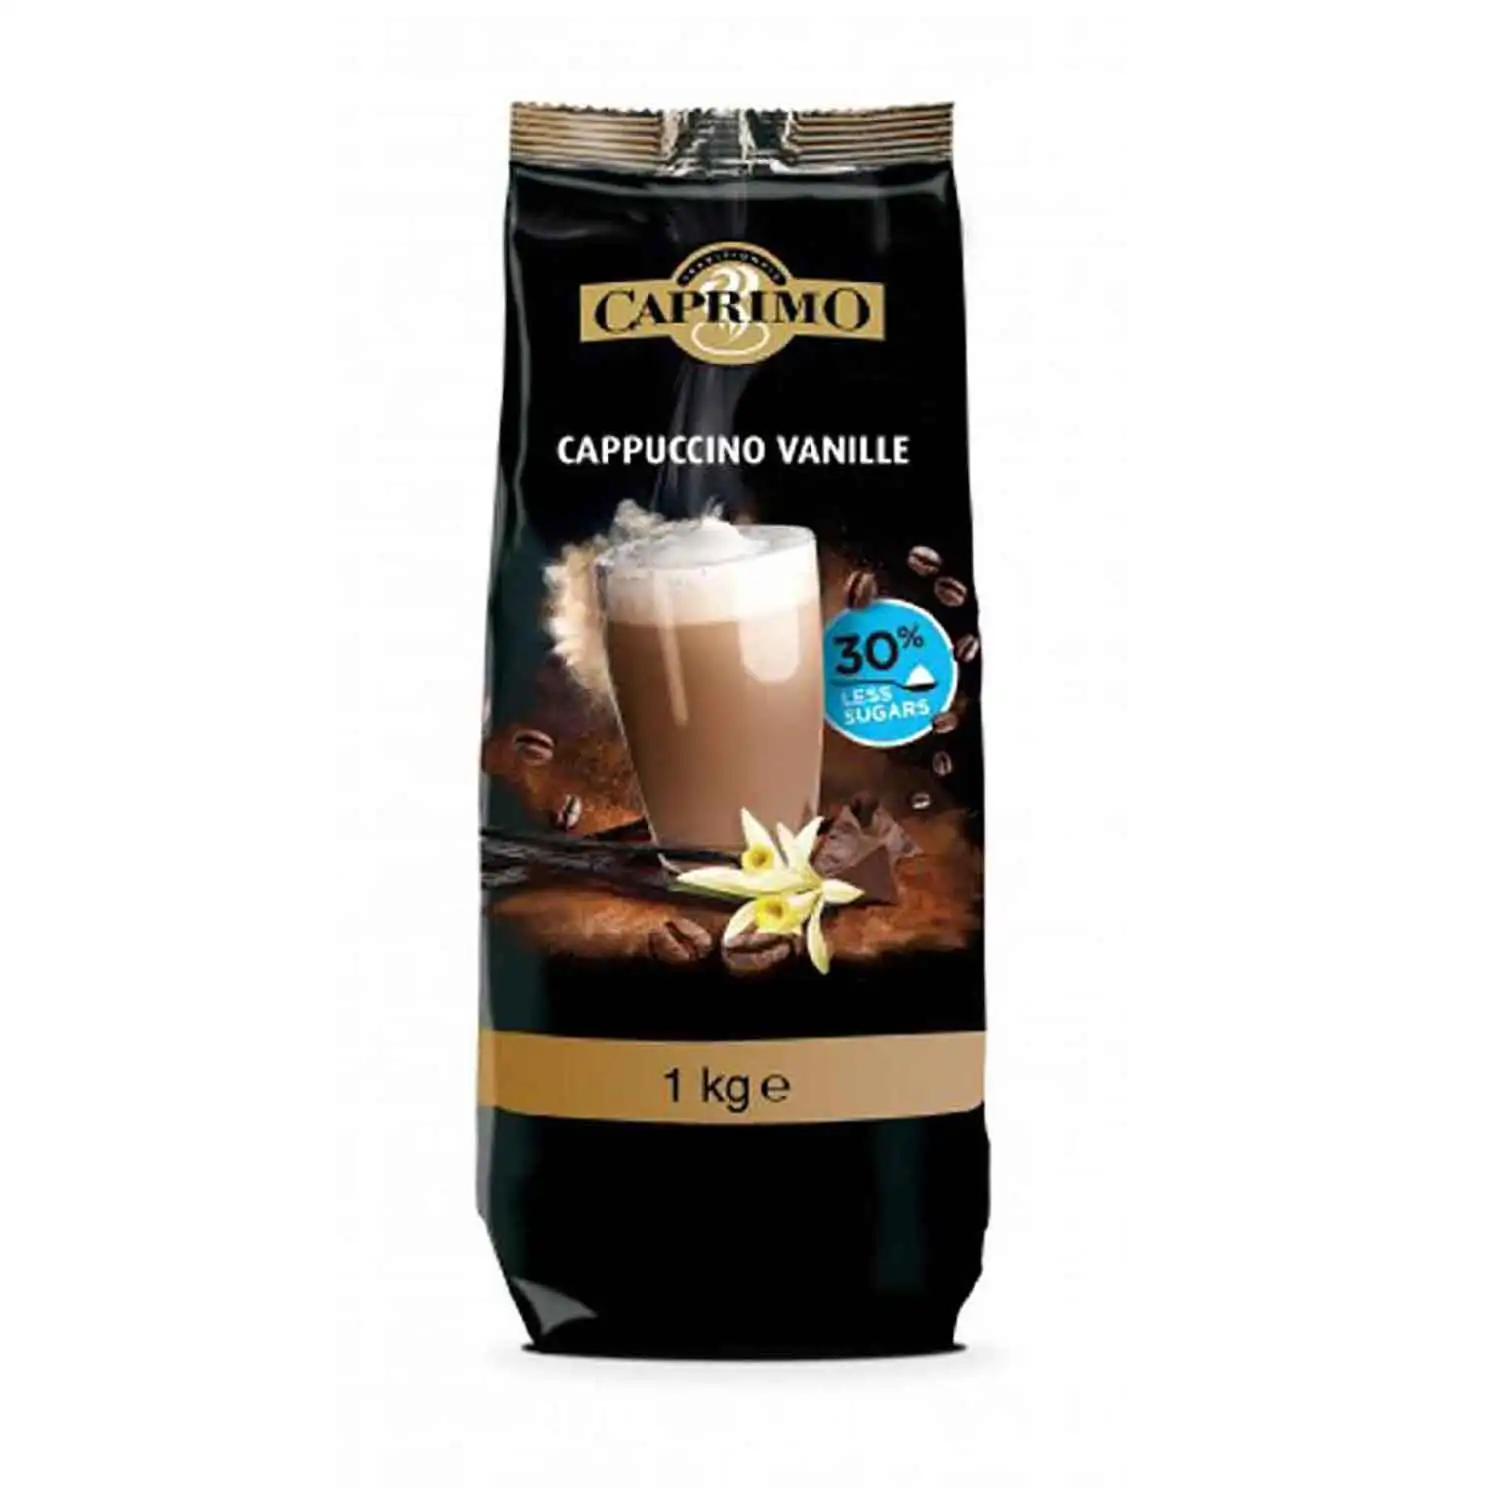 Caprimo cappuccino vanilla less sug. 1kg - Buy at Real Tobacco